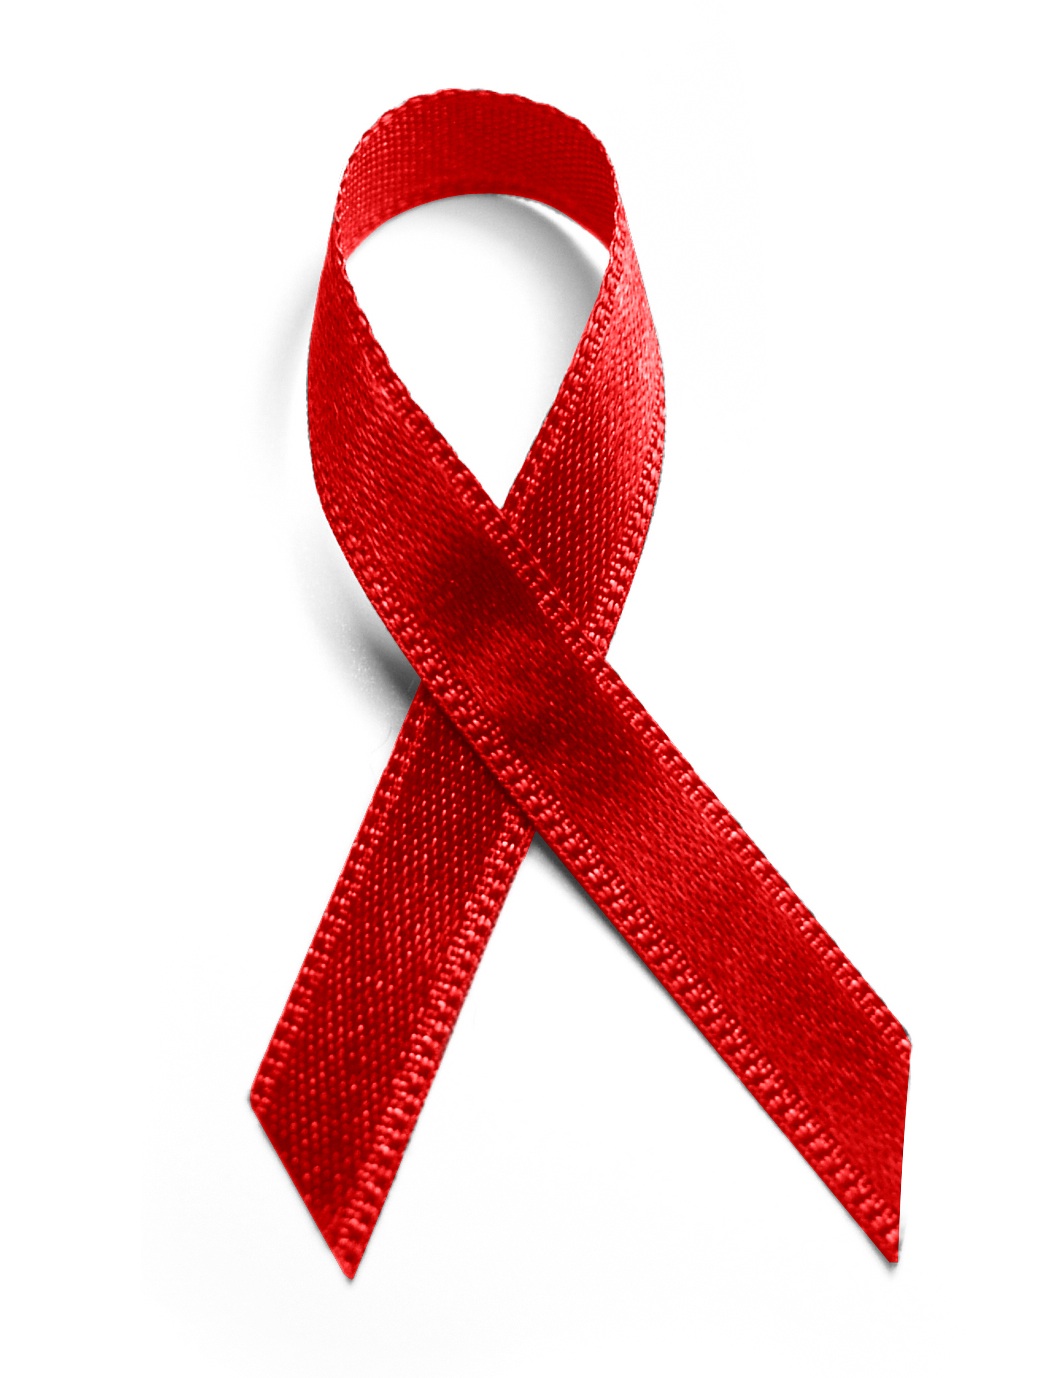 Health : World AIDS Day